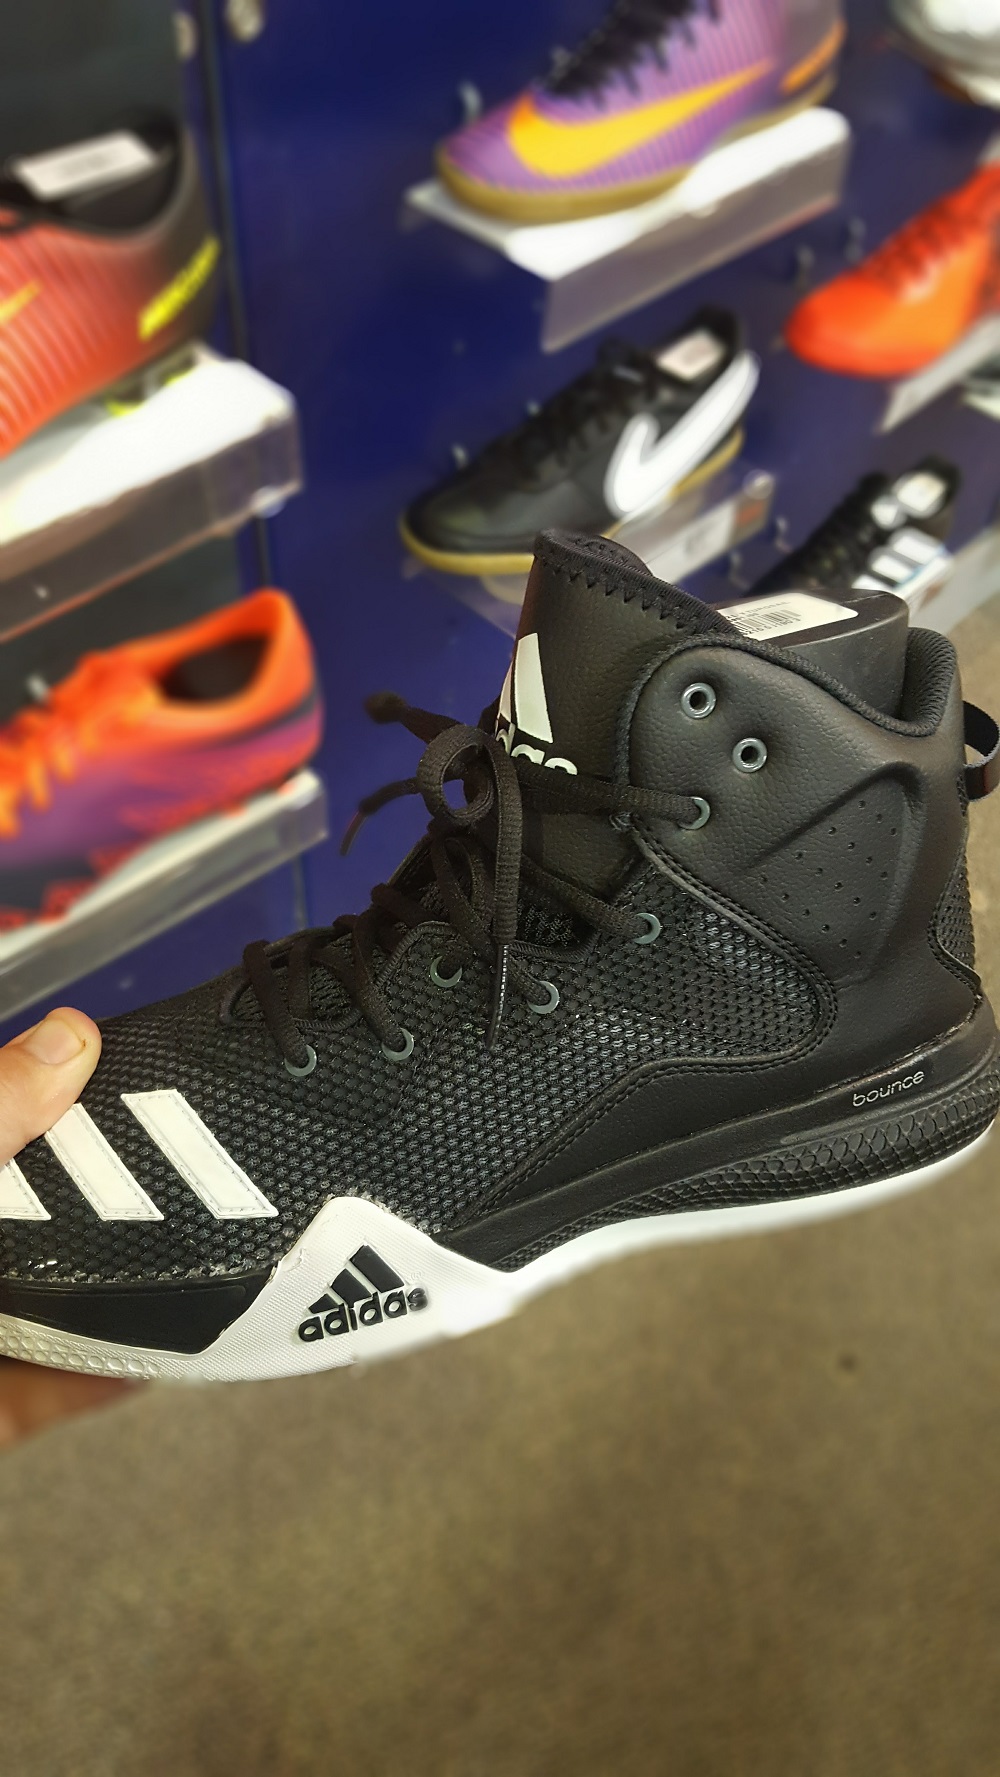 adidas dual threat basketball shoes